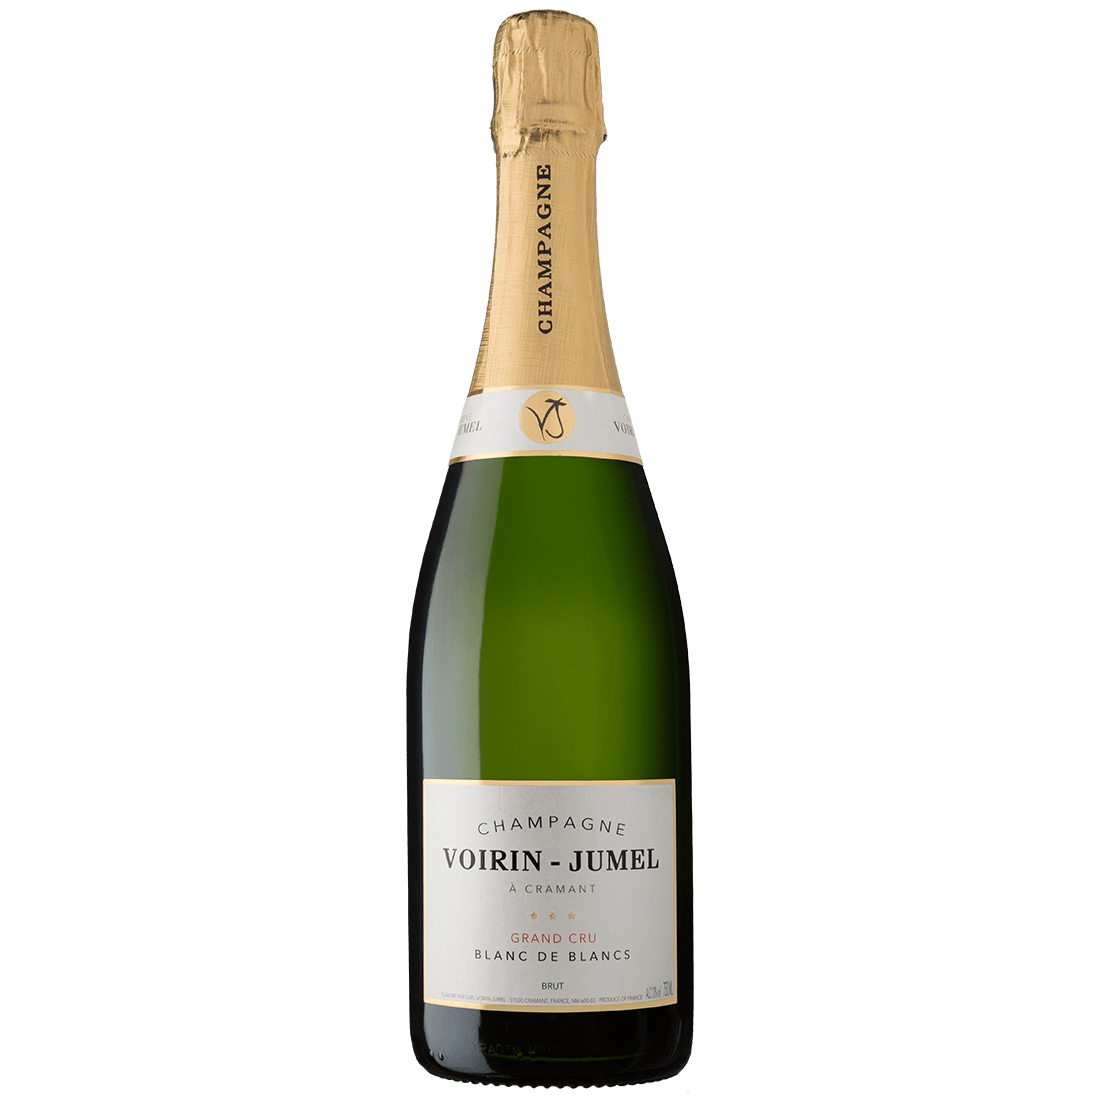 Voirin-Jumel Champagne “Tradition” Brut NV 750ml